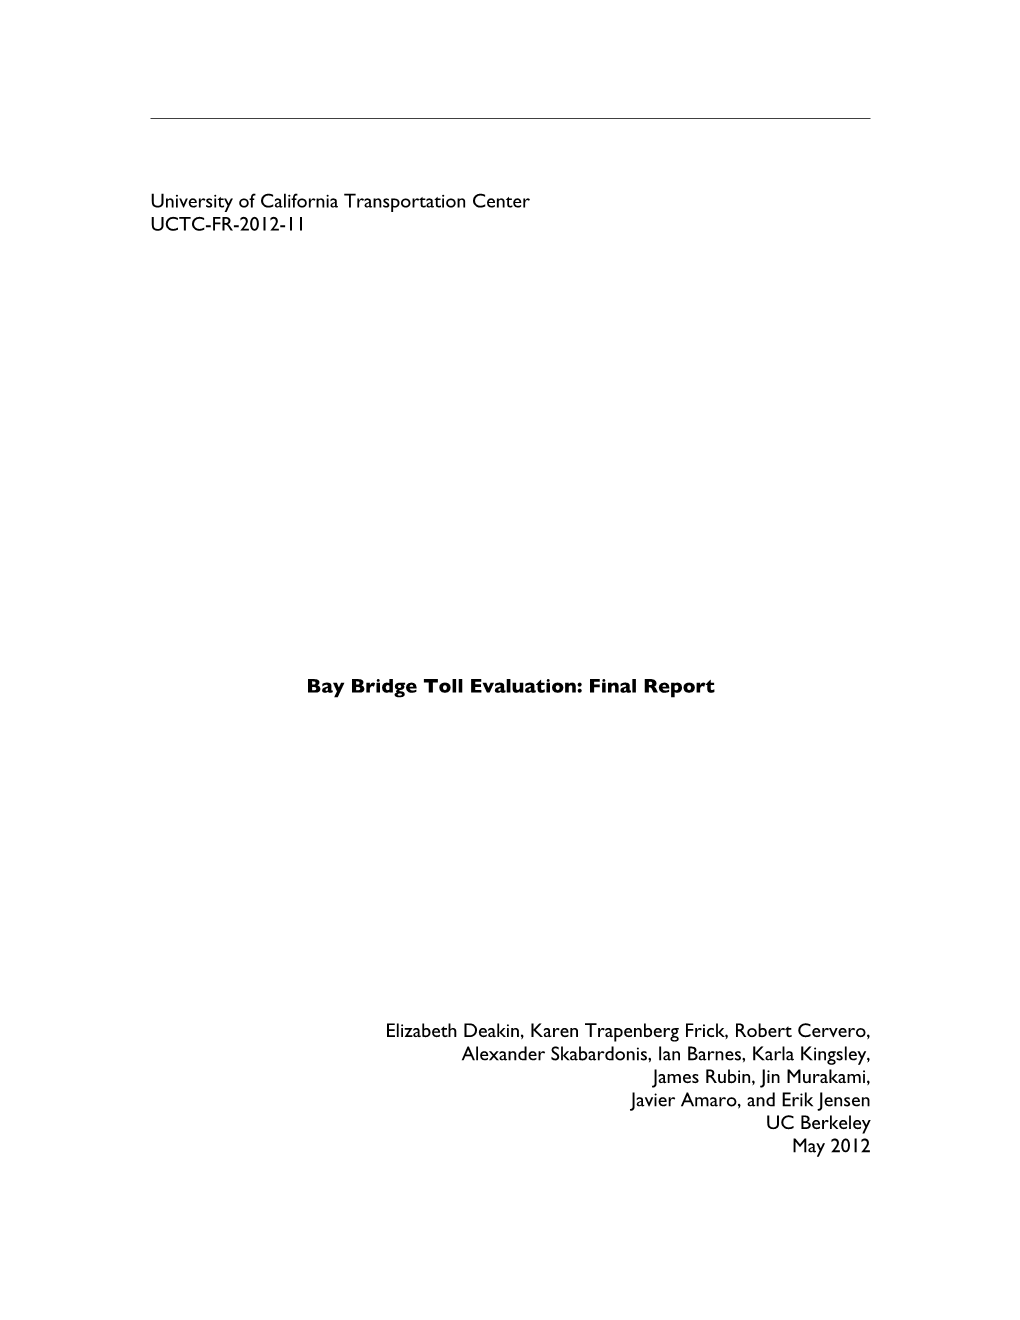 Bay Bridge Toll Evaluation Final Report